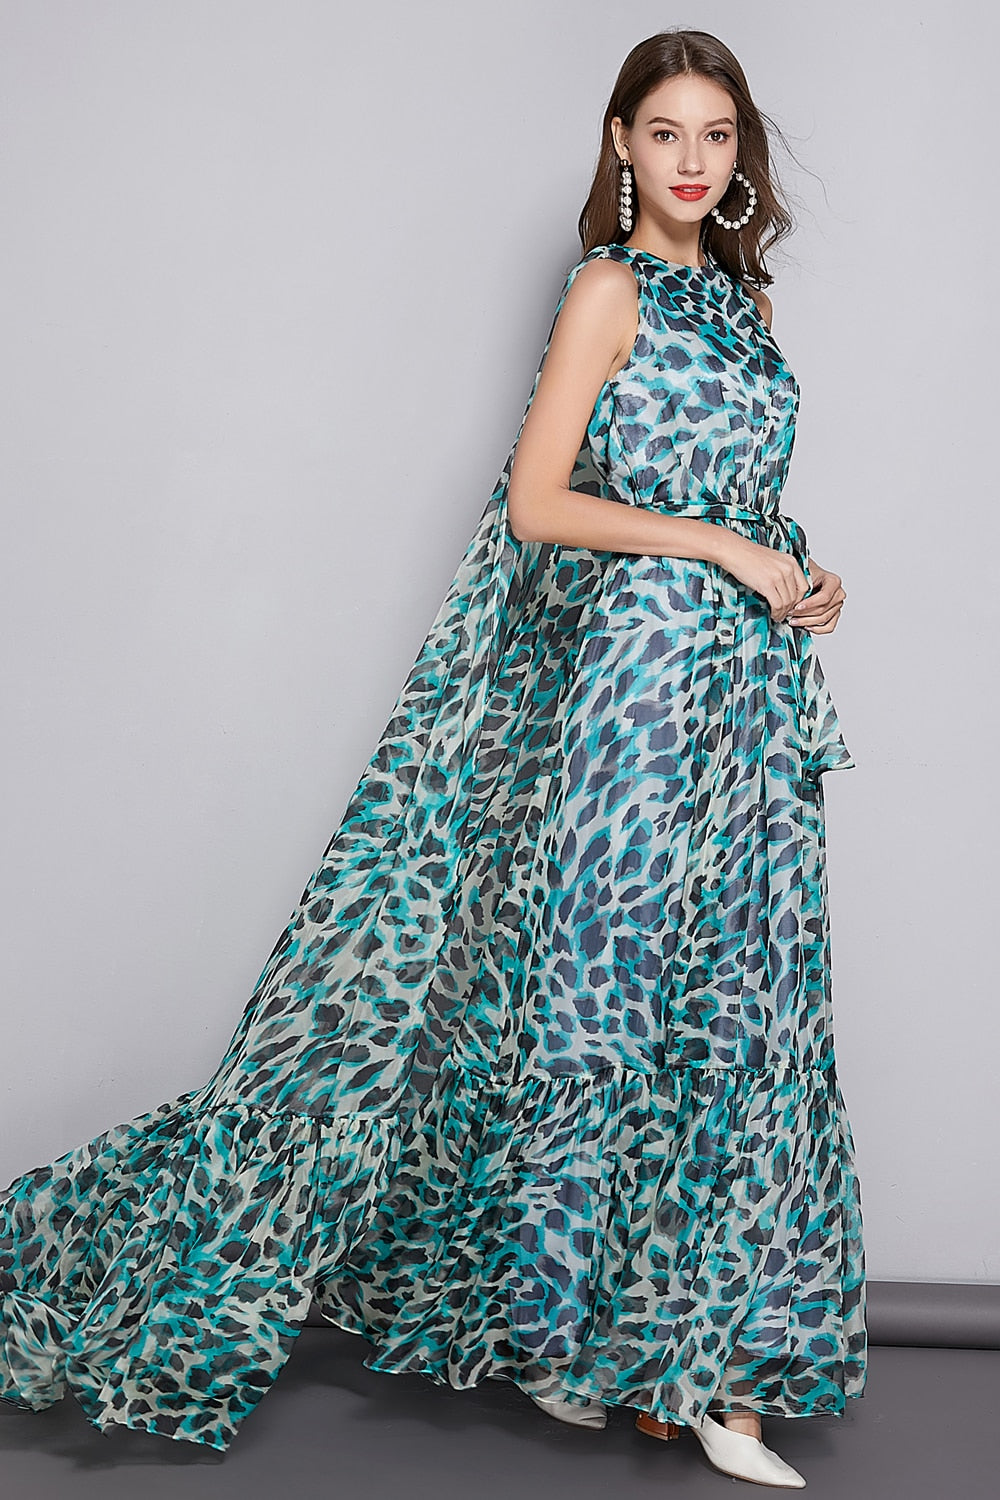 2XL BLue Leopard Print Chiffon Dress O Neck Sleeveless Plus Size Women